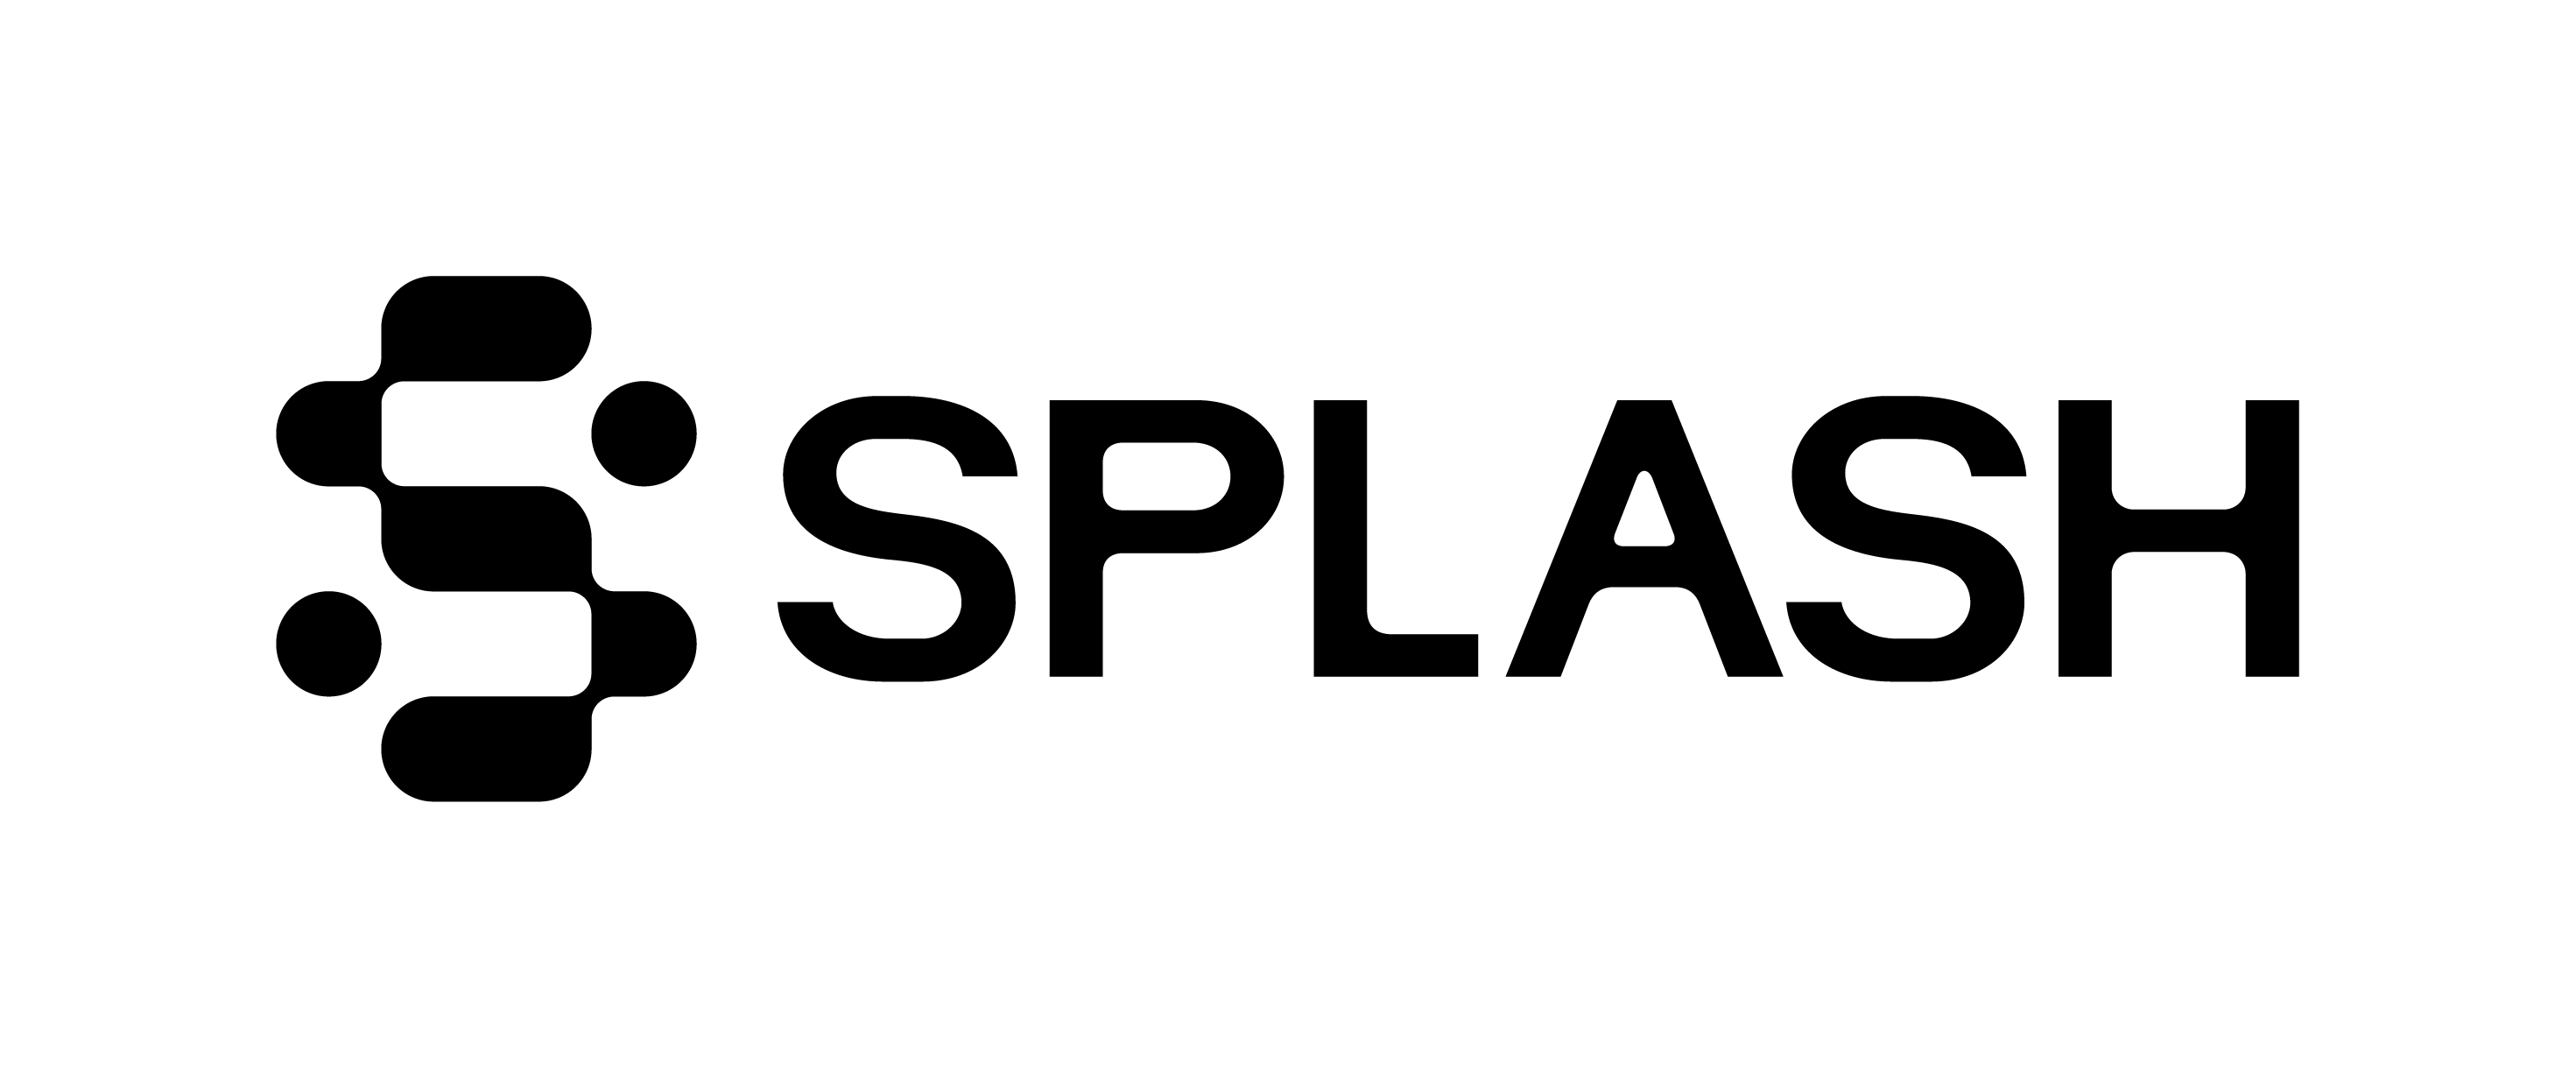 Splash Financial Logo